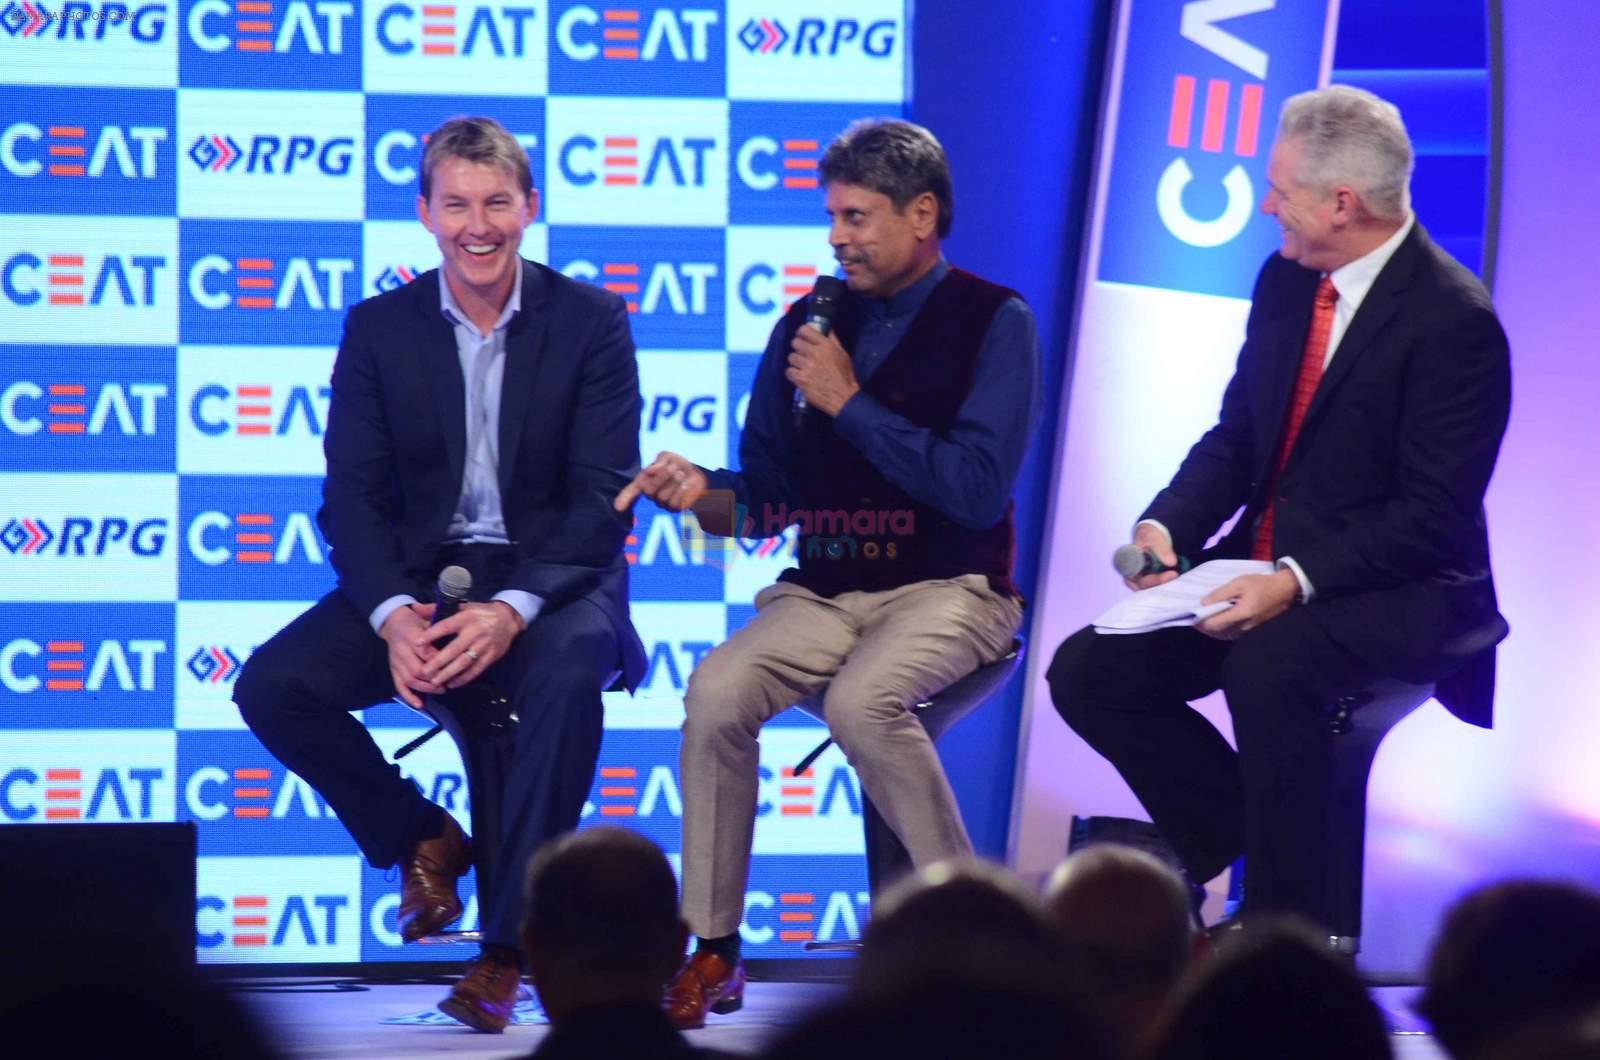 Kapil Dev at Ceat Cricket Awards in Trident, Mumbai on 25th May 2015